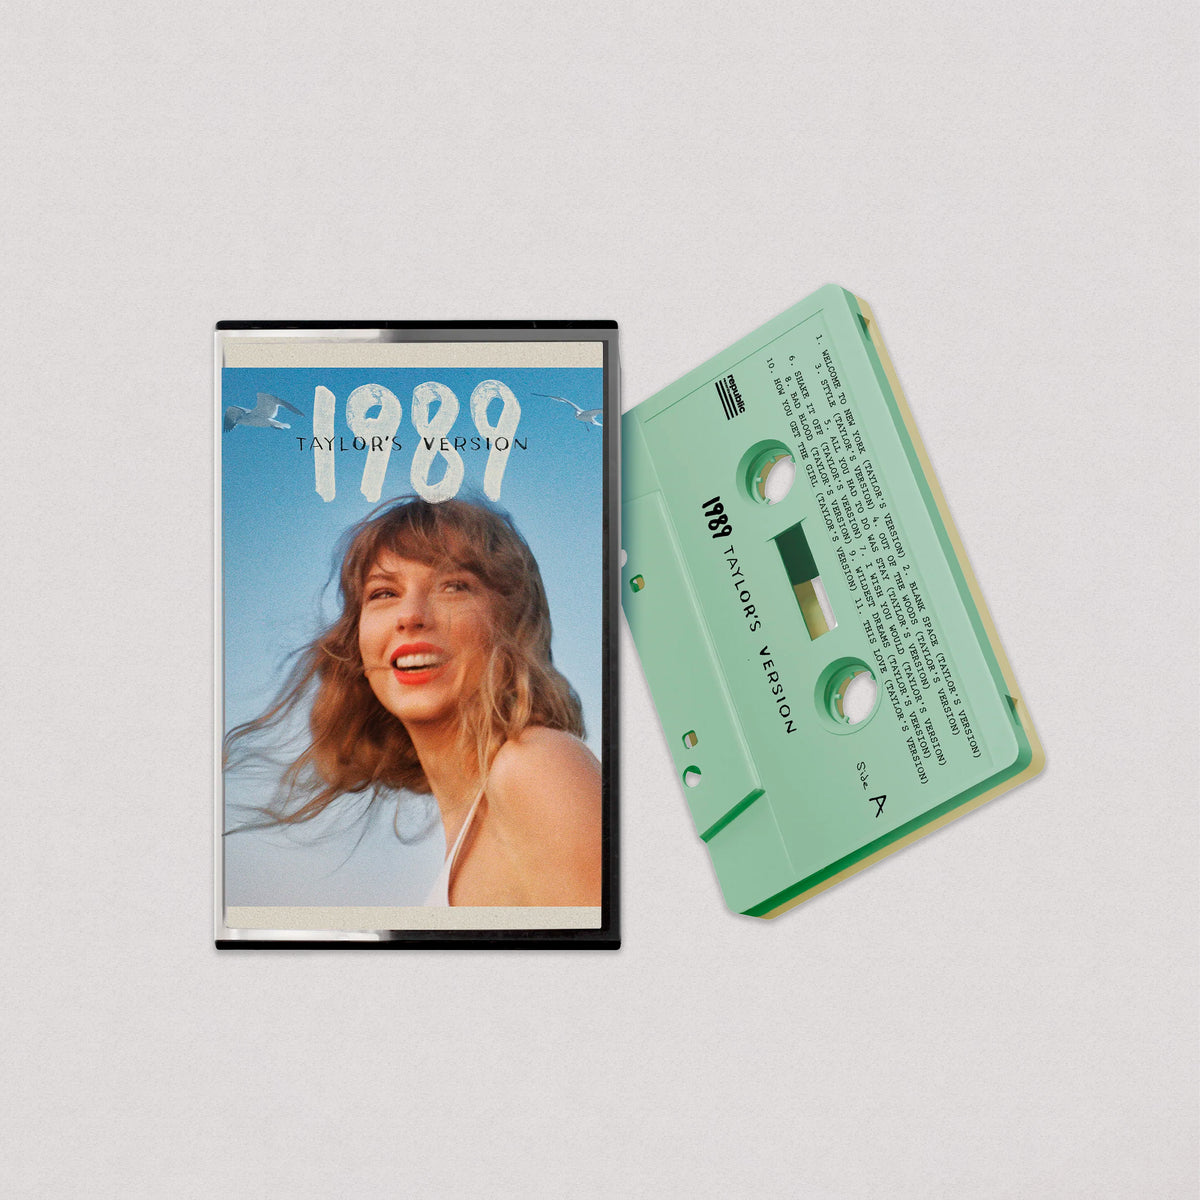 Taylor Swift - 1989 "Taylor's Version" (Cassette)